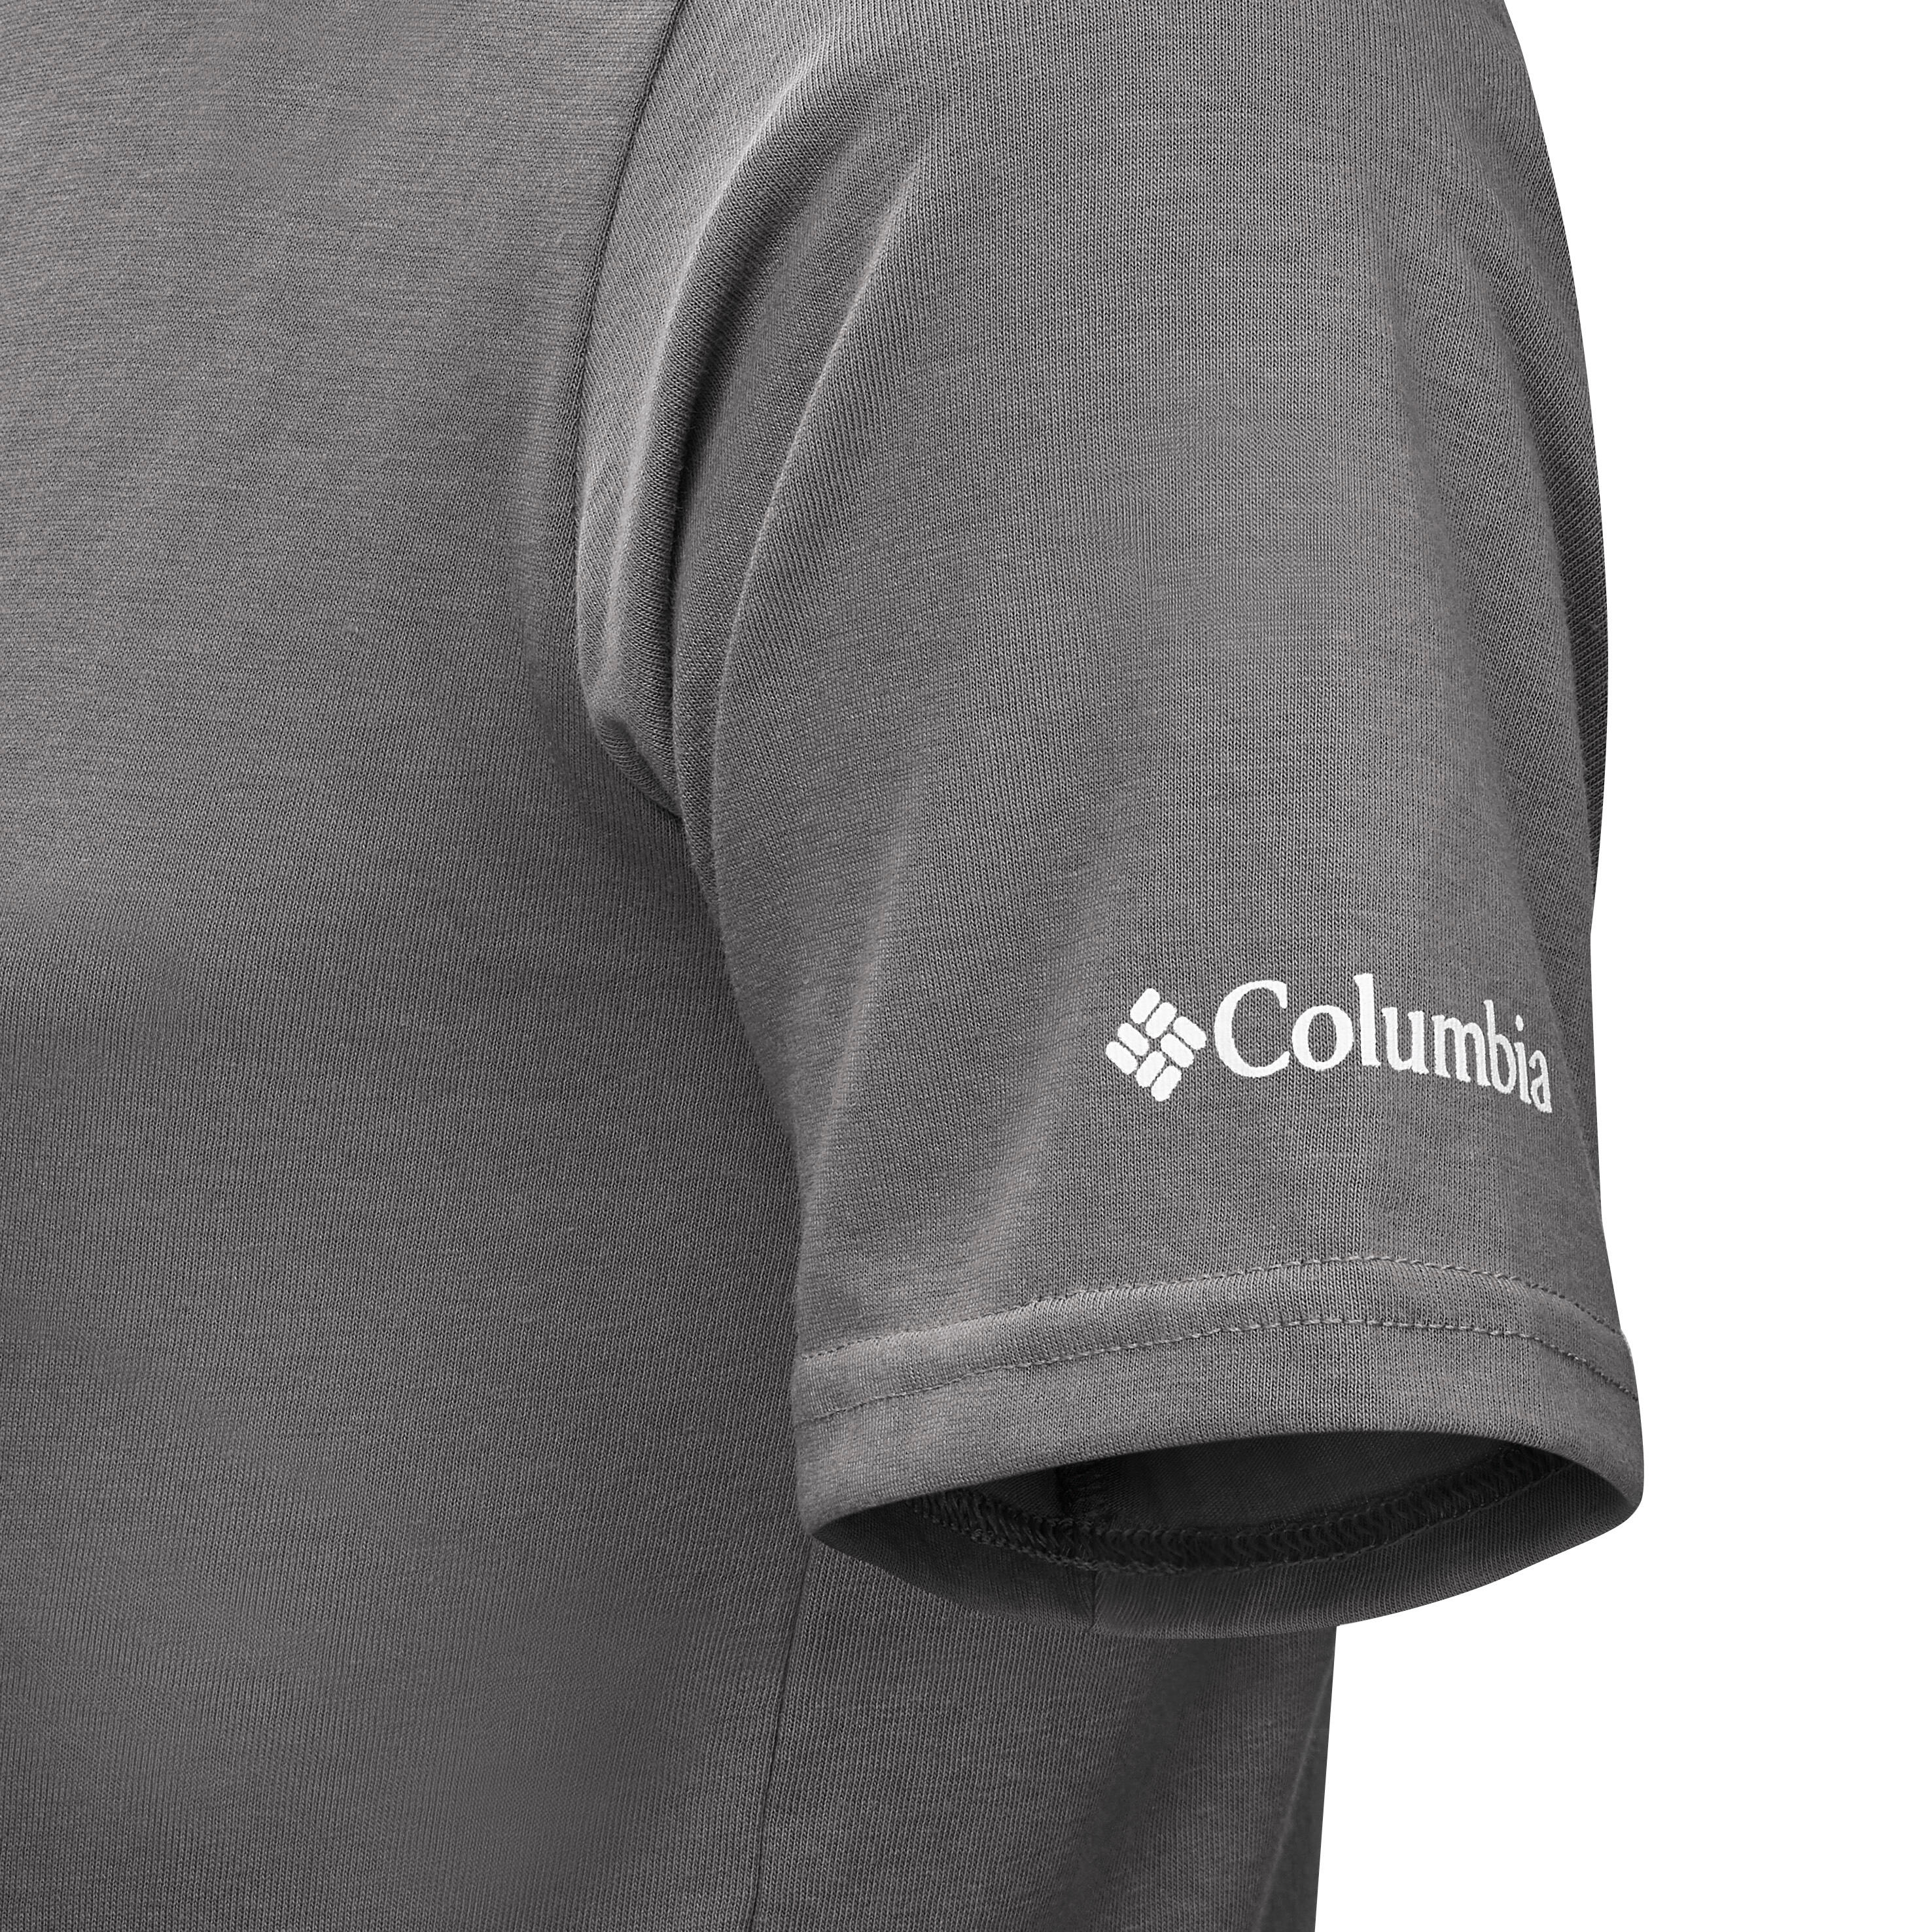 Kids' Hiking T-Shirt Columbia Tech Tee - 7 to 15 Years - grey 4/5